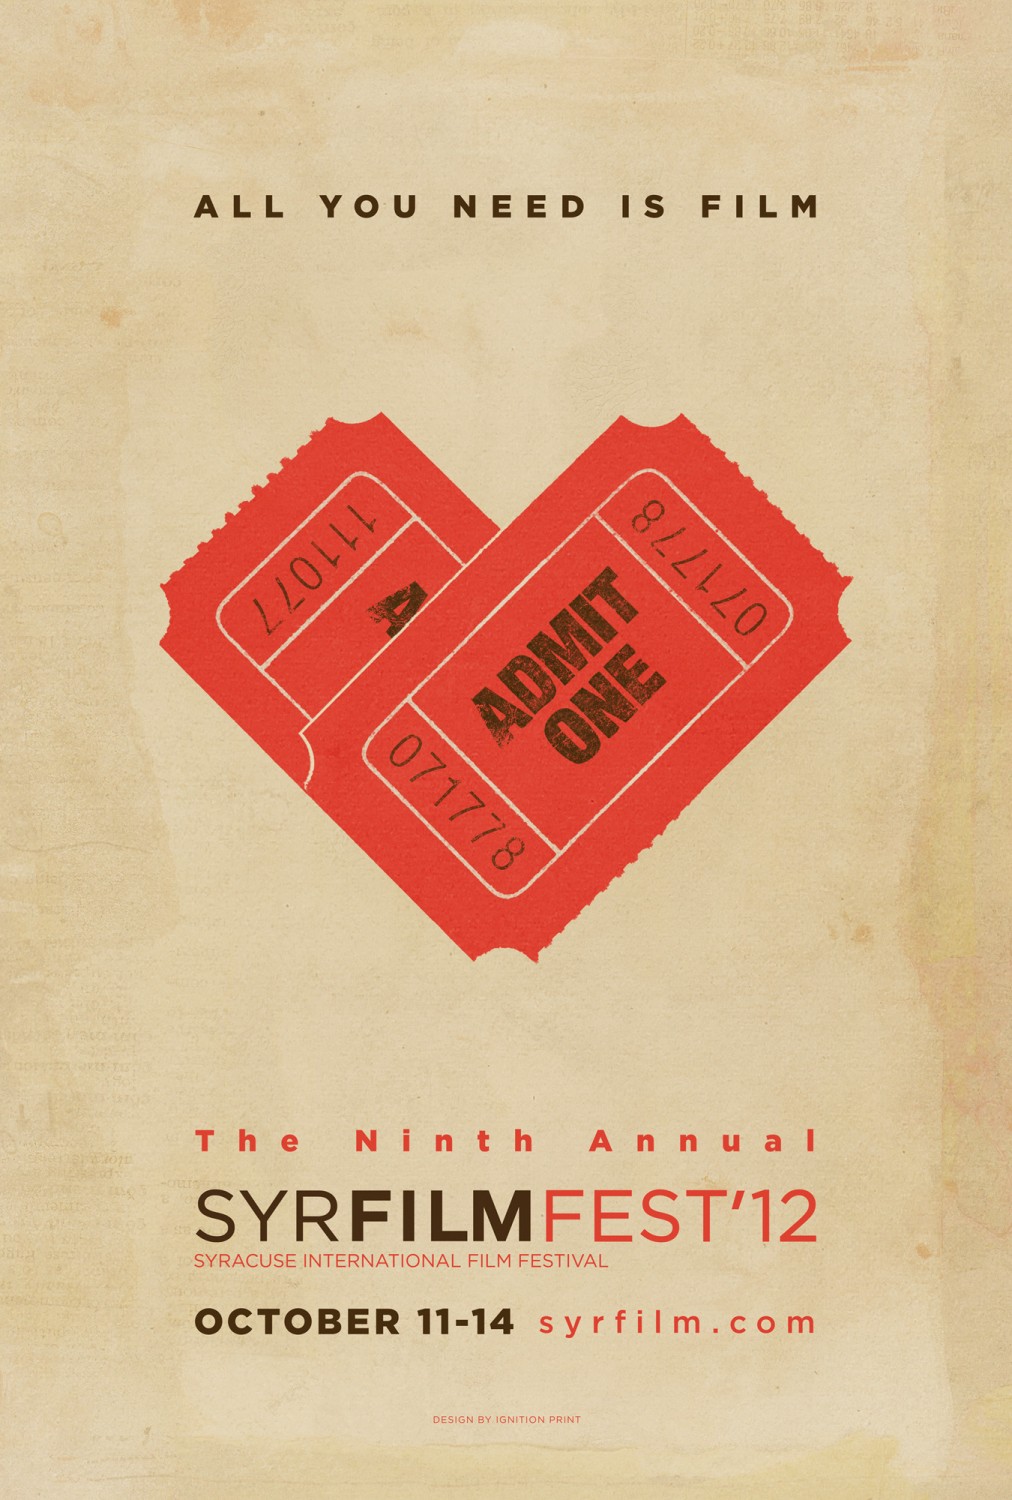 Extra Large TV Poster Image for Syracuse International Film Festival 